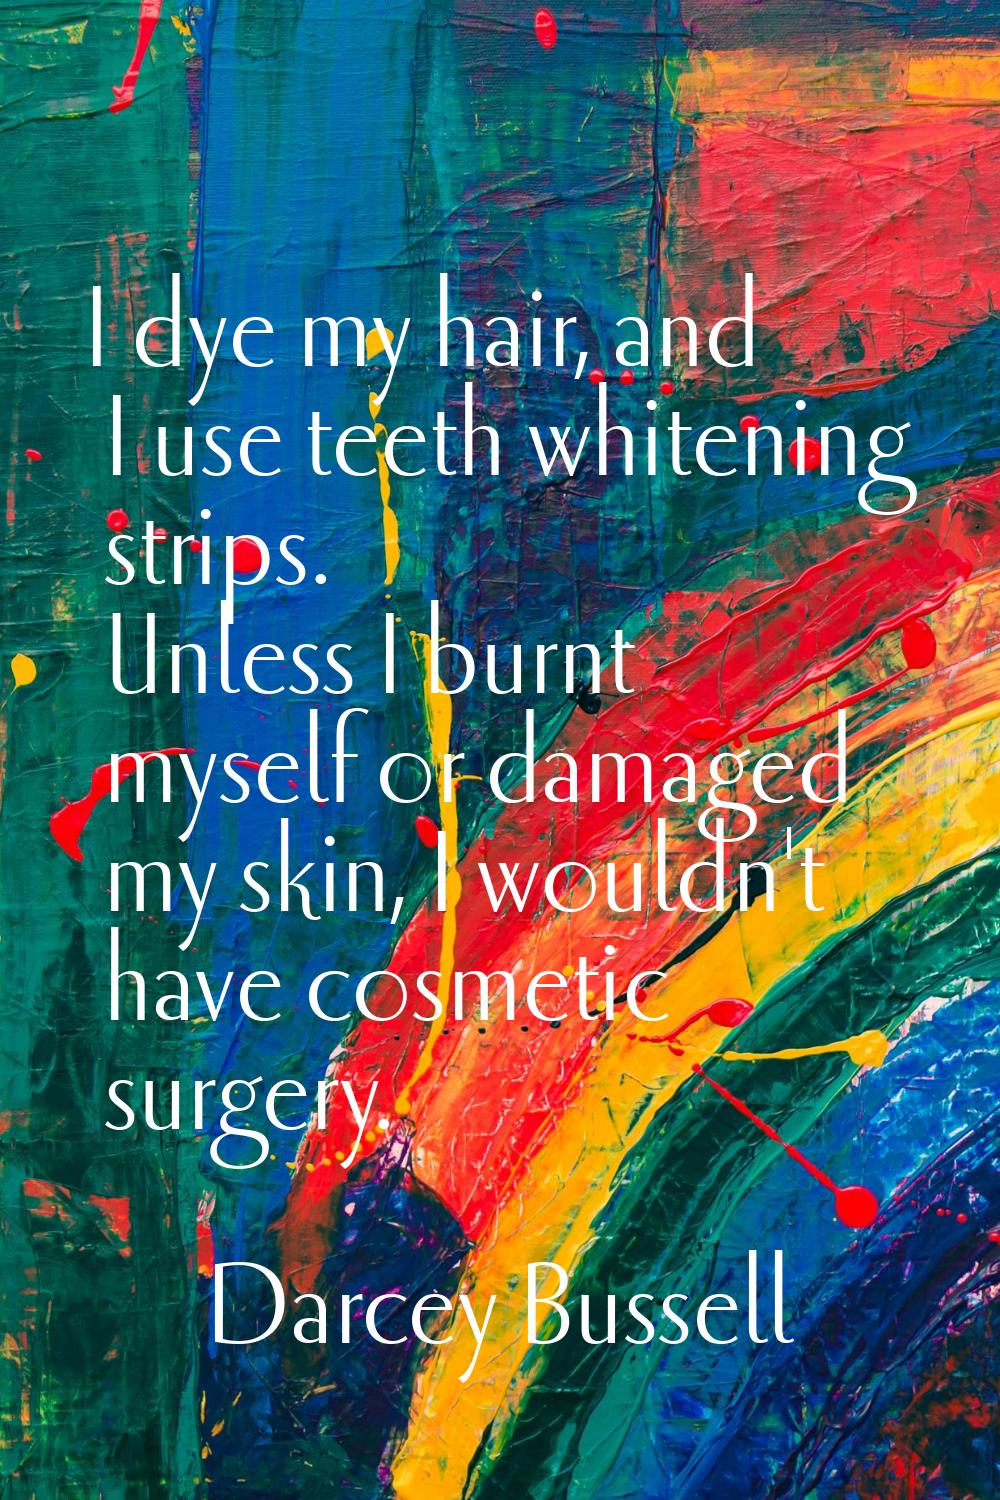 I dye my hair, and I use teeth whitening strips. Unless I burnt myself or damaged my skin, I wouldn